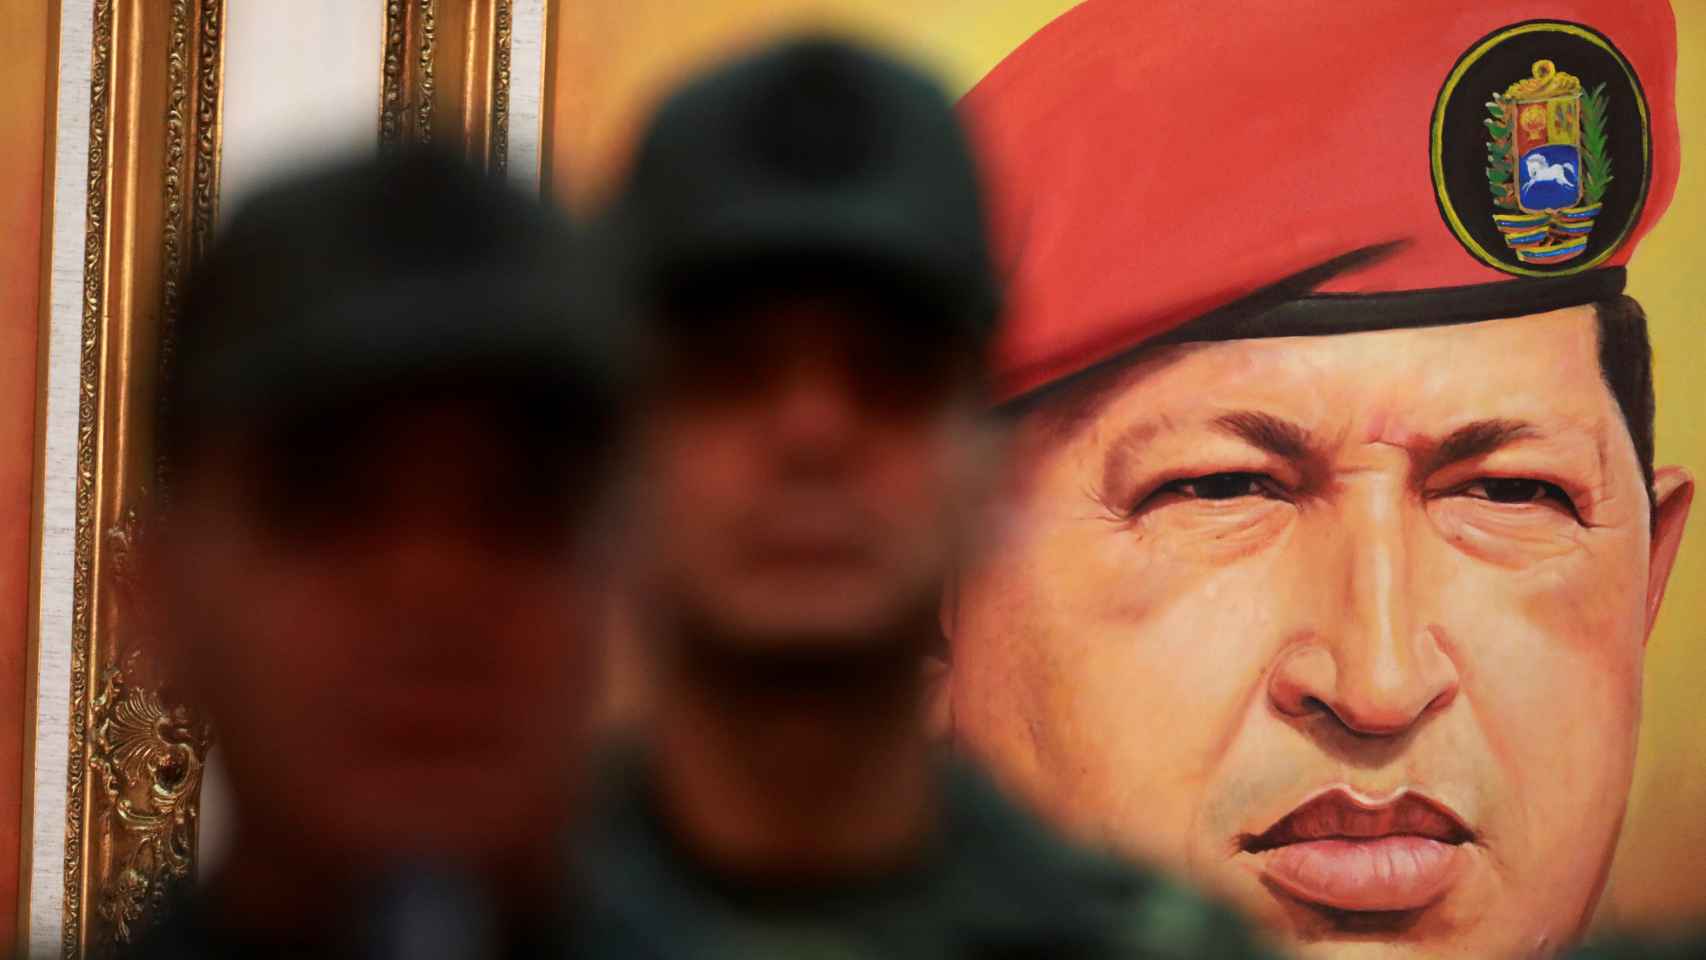 Imagen de Hugo Chávez frente a unos militares en Caracas